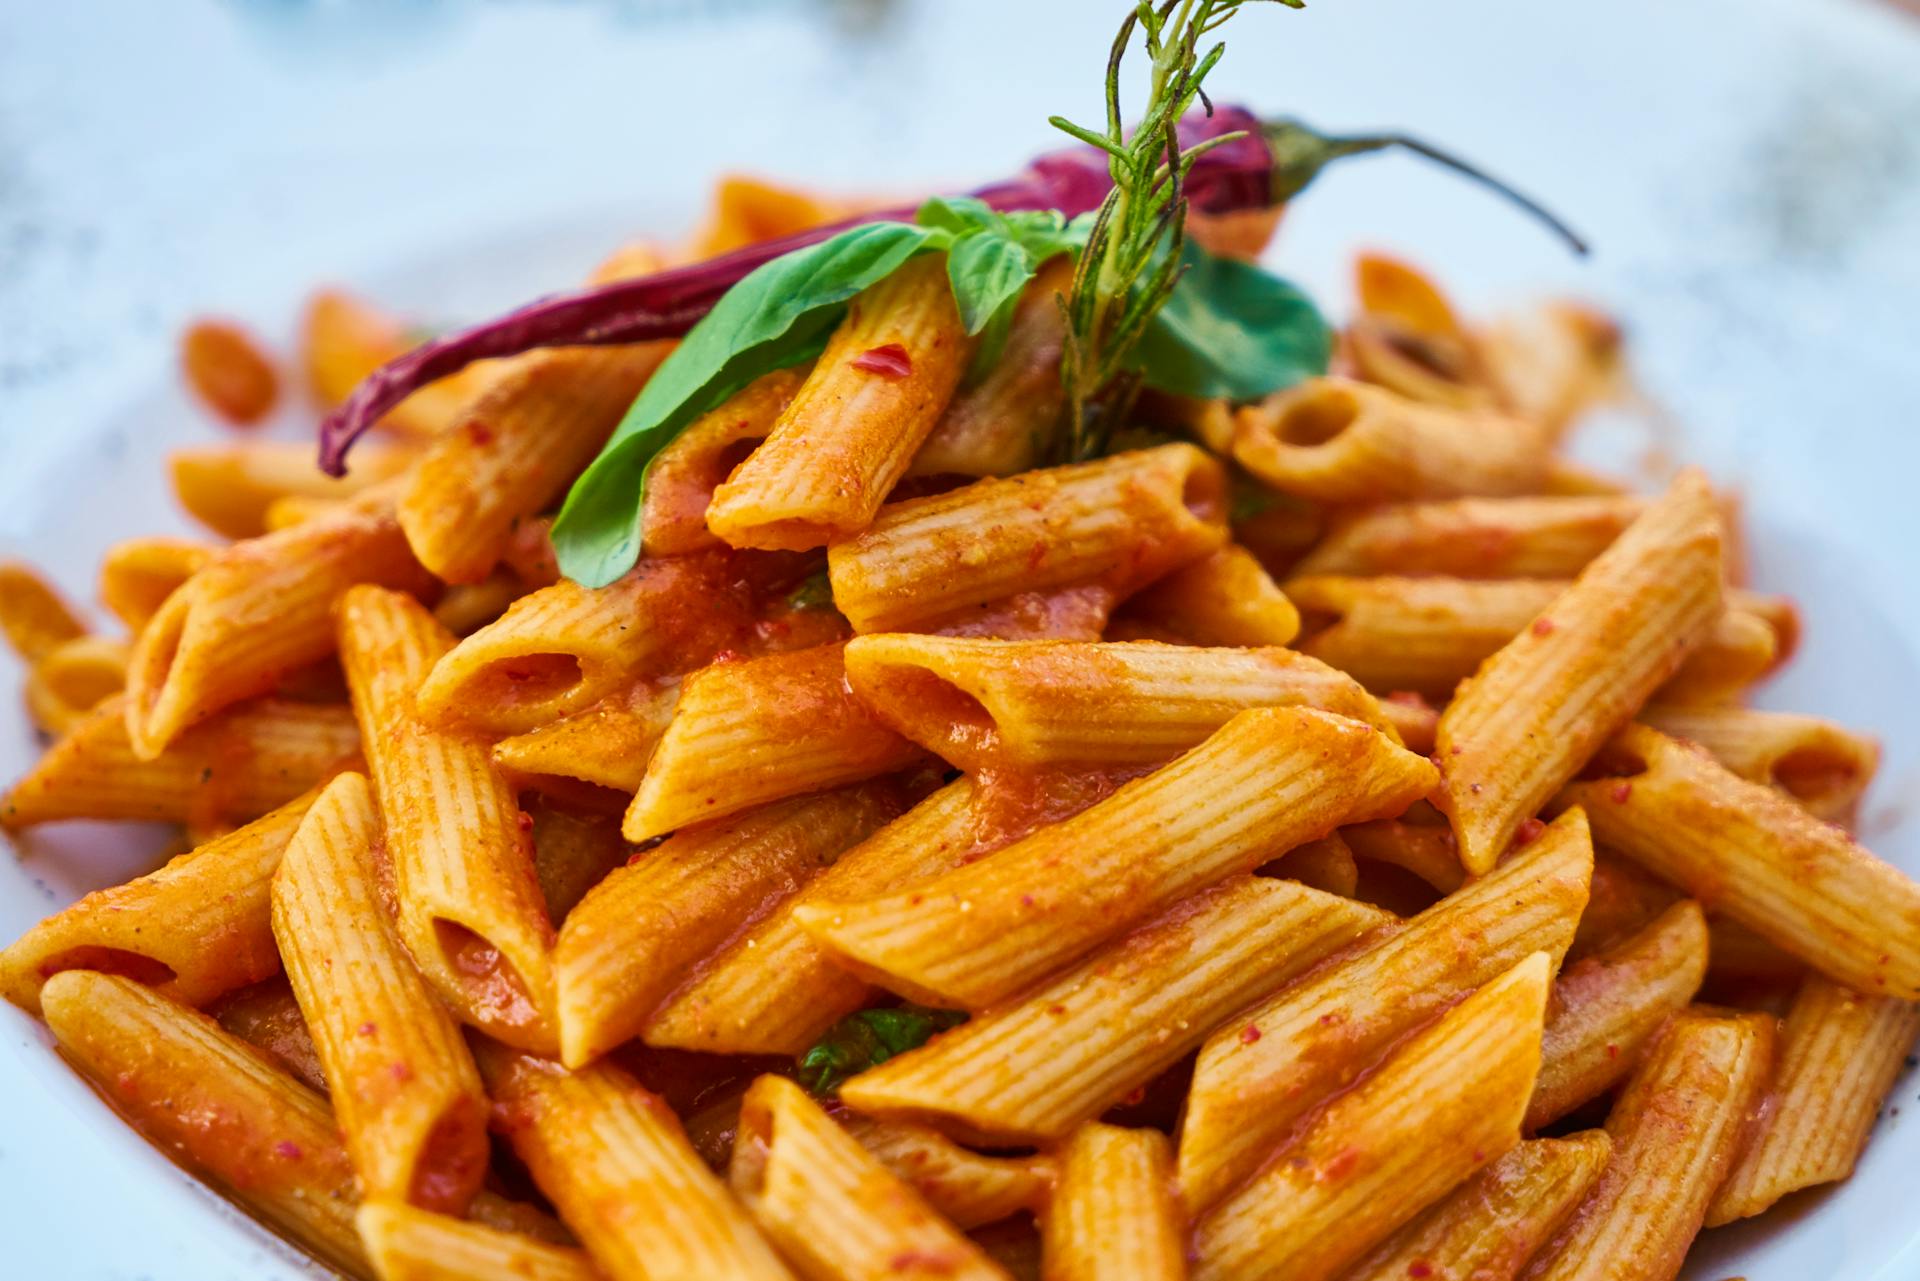 Plate of pasta | Source: Pexels